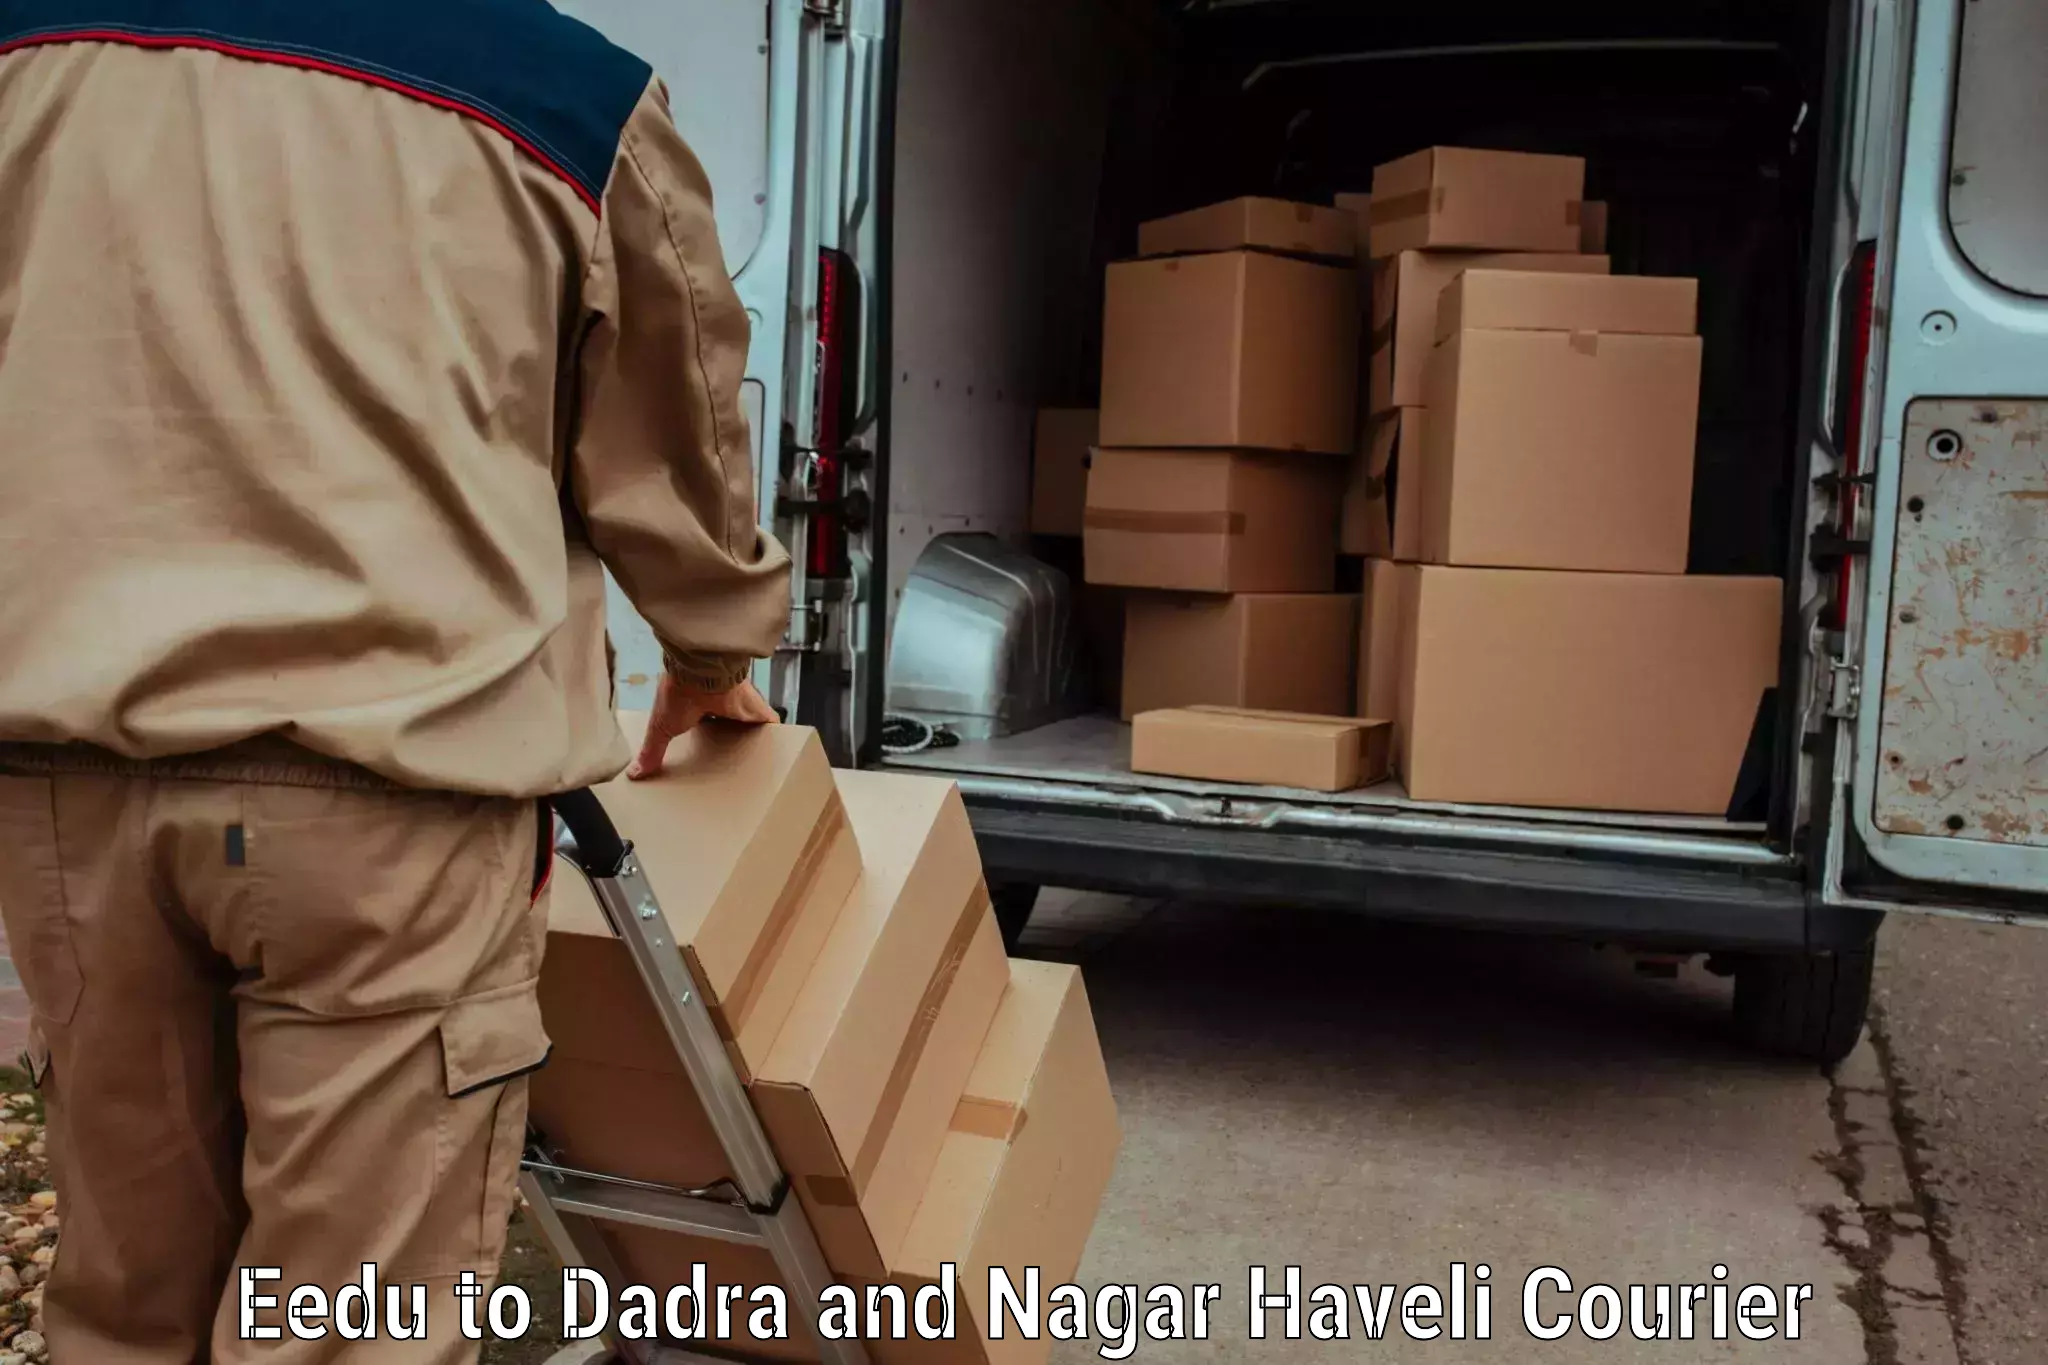 Specialized shipment handling Eedu to Dadra and Nagar Haveli